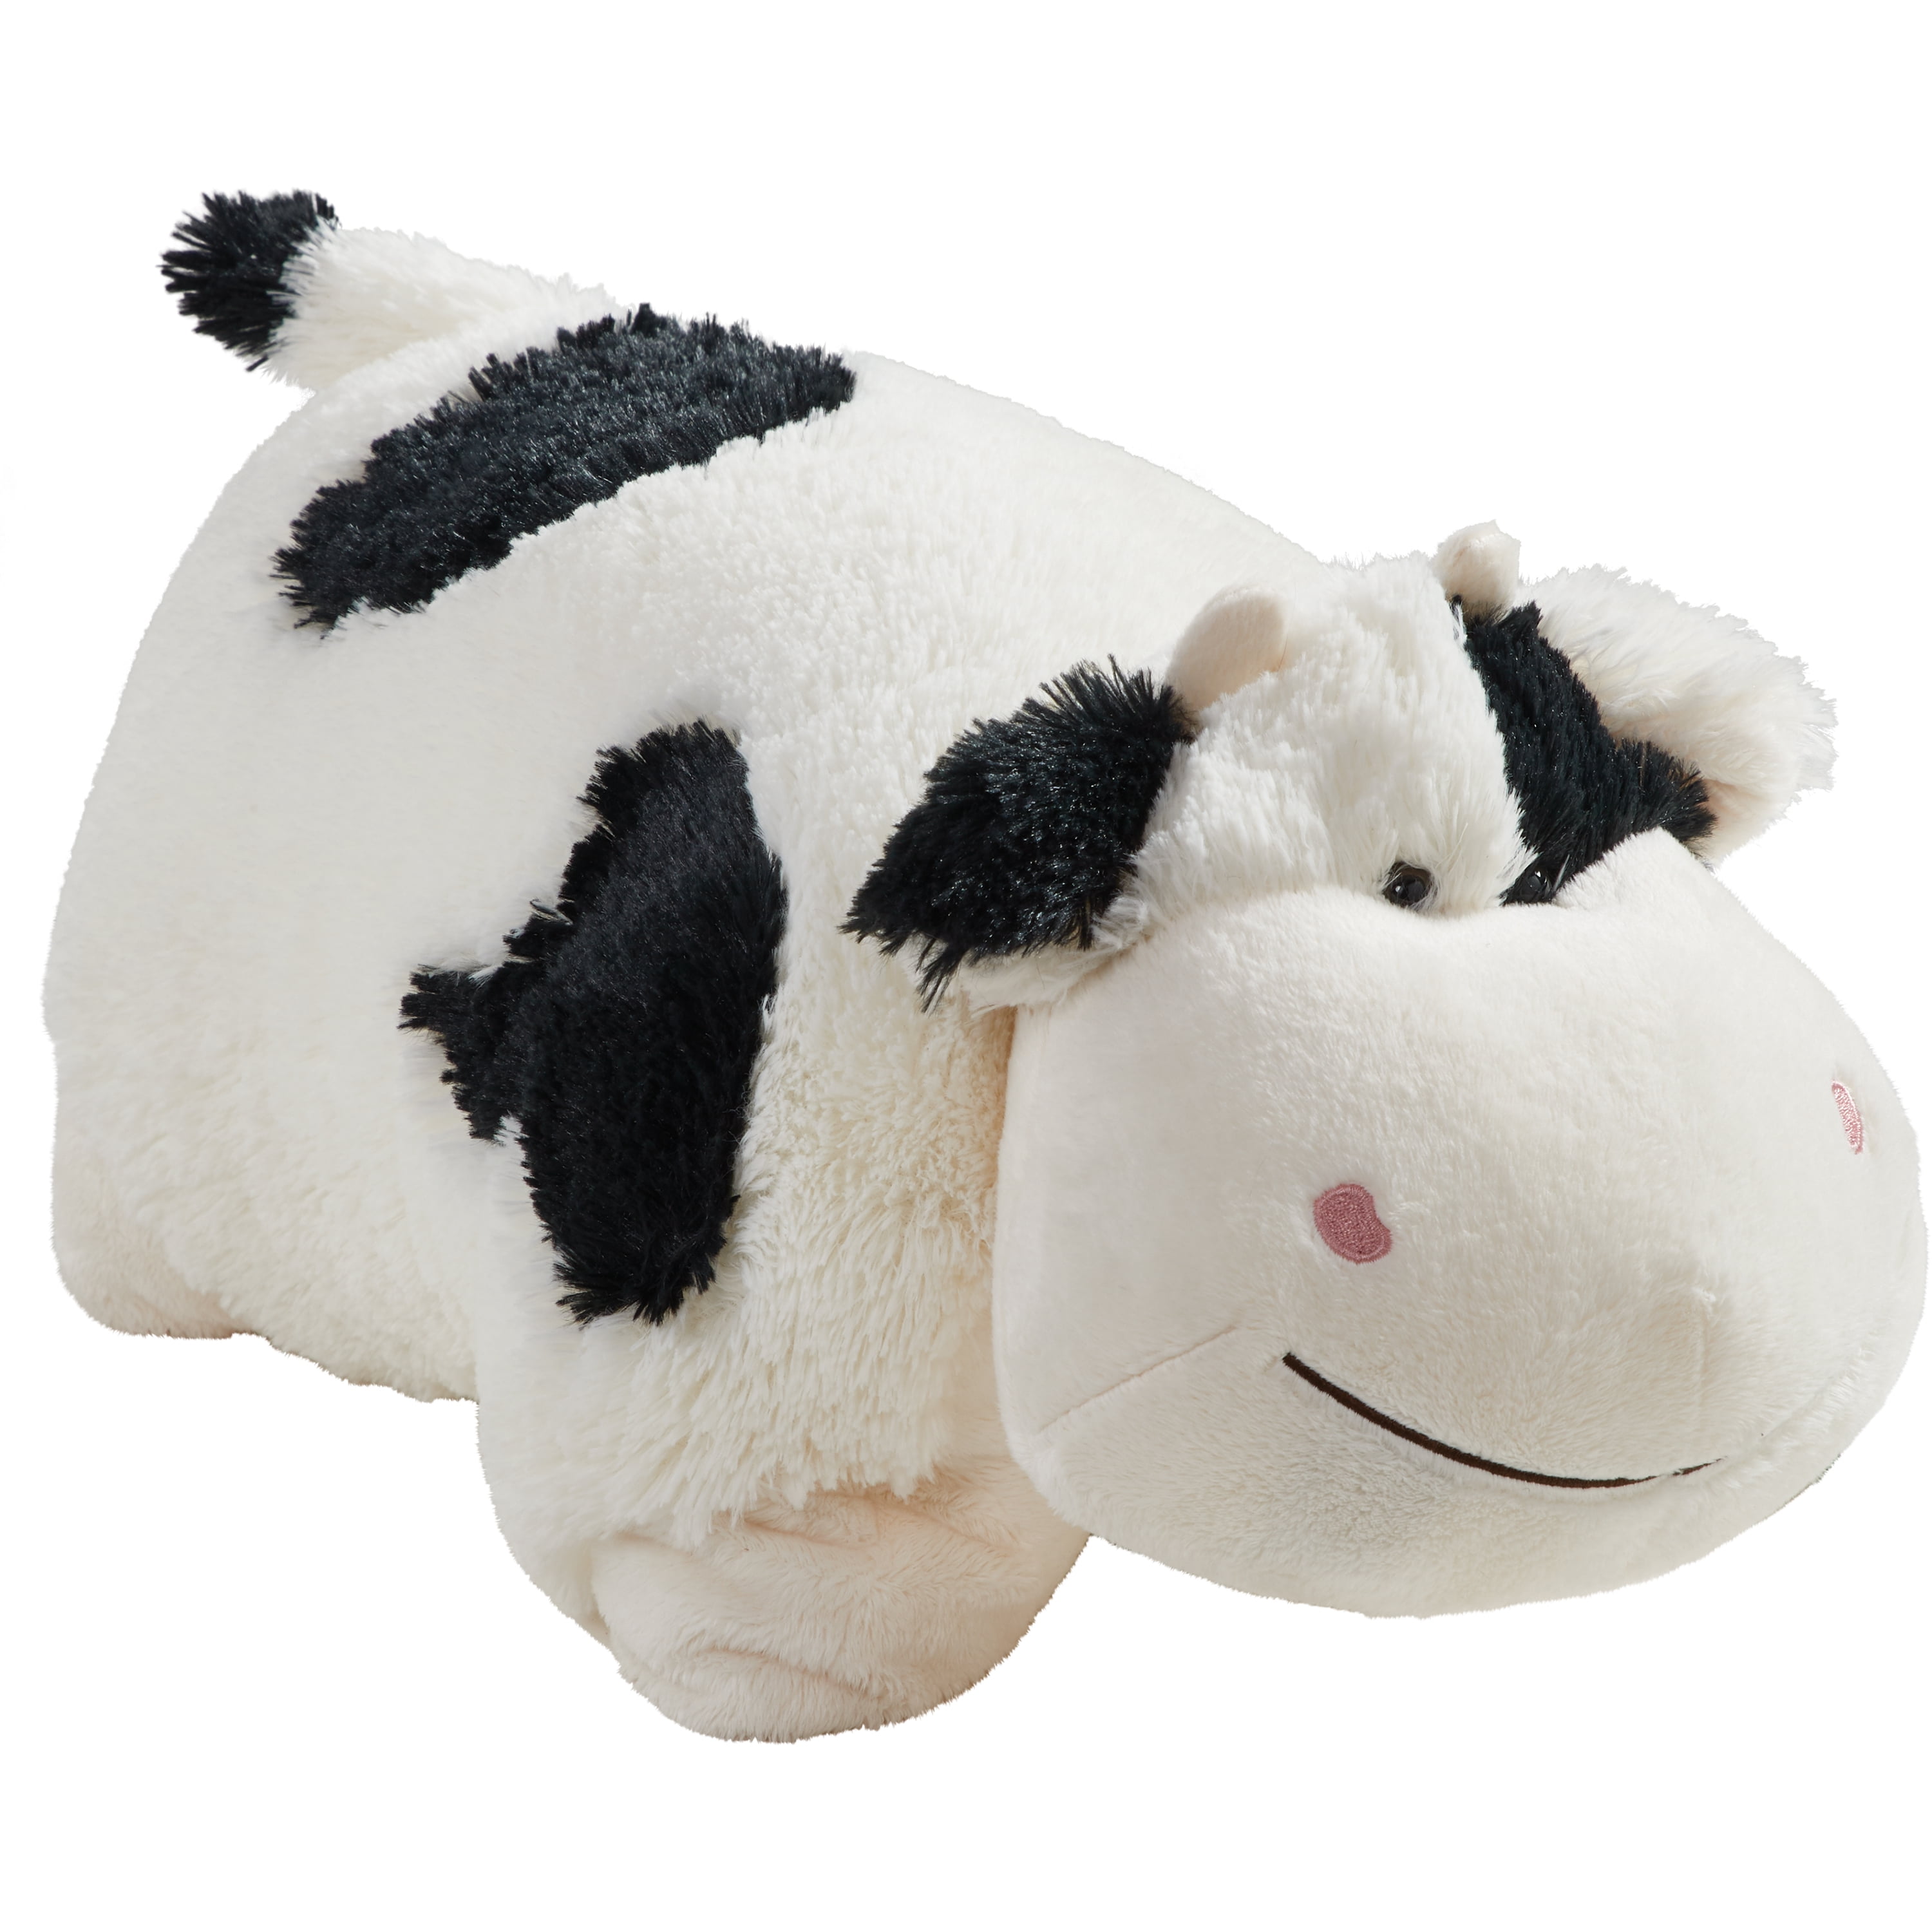 Pillow Pets Disney Moana Stuffed Animal Plush 16 PUA Bedtime Toy Doll Washable for sale online 